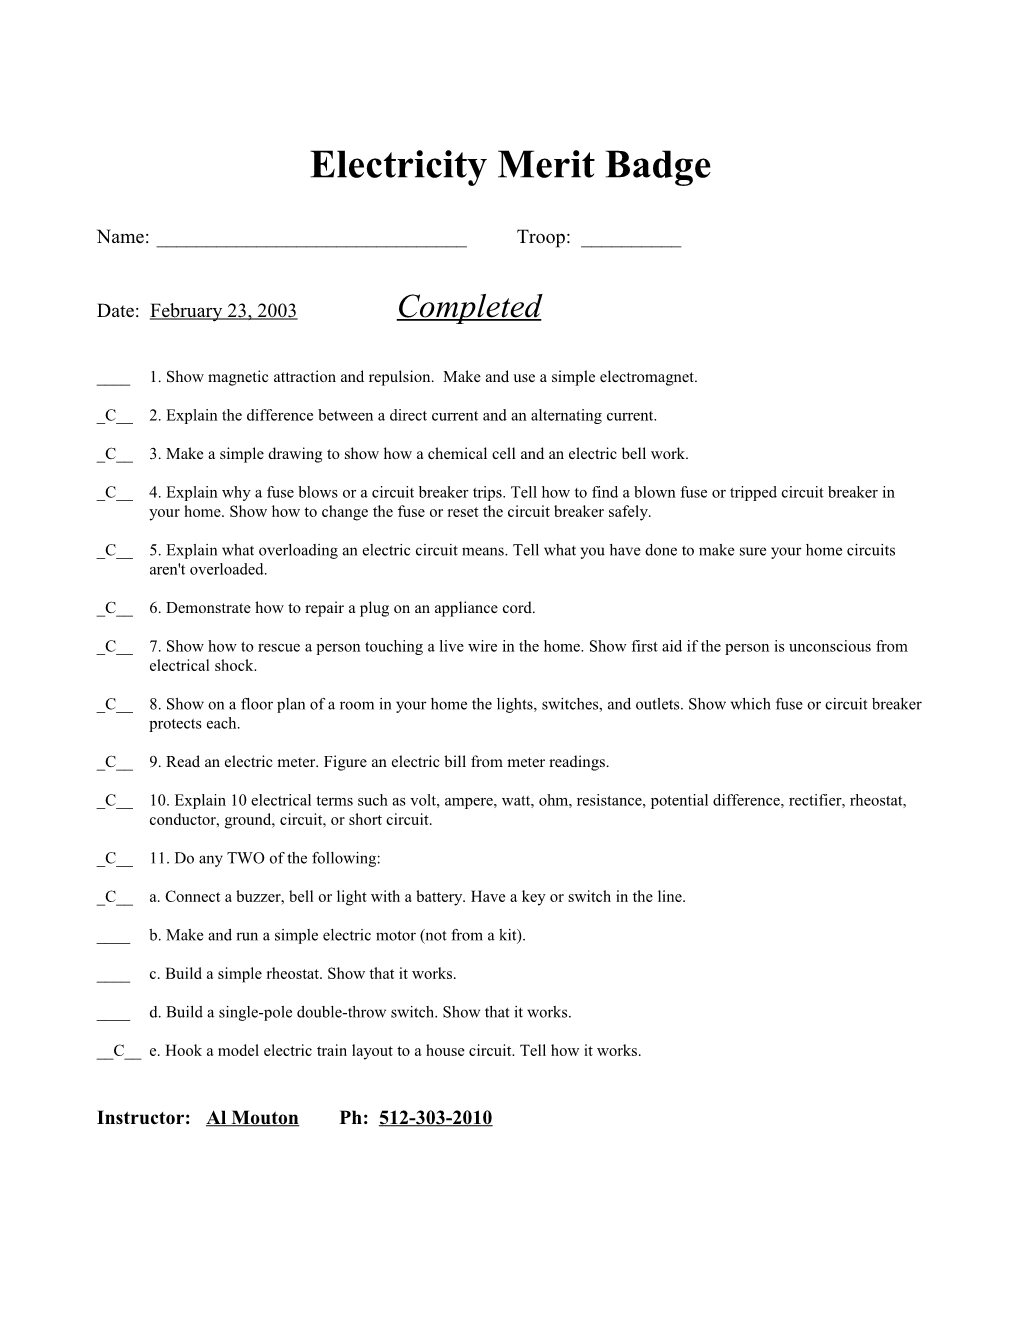 Electricity Merit Badge